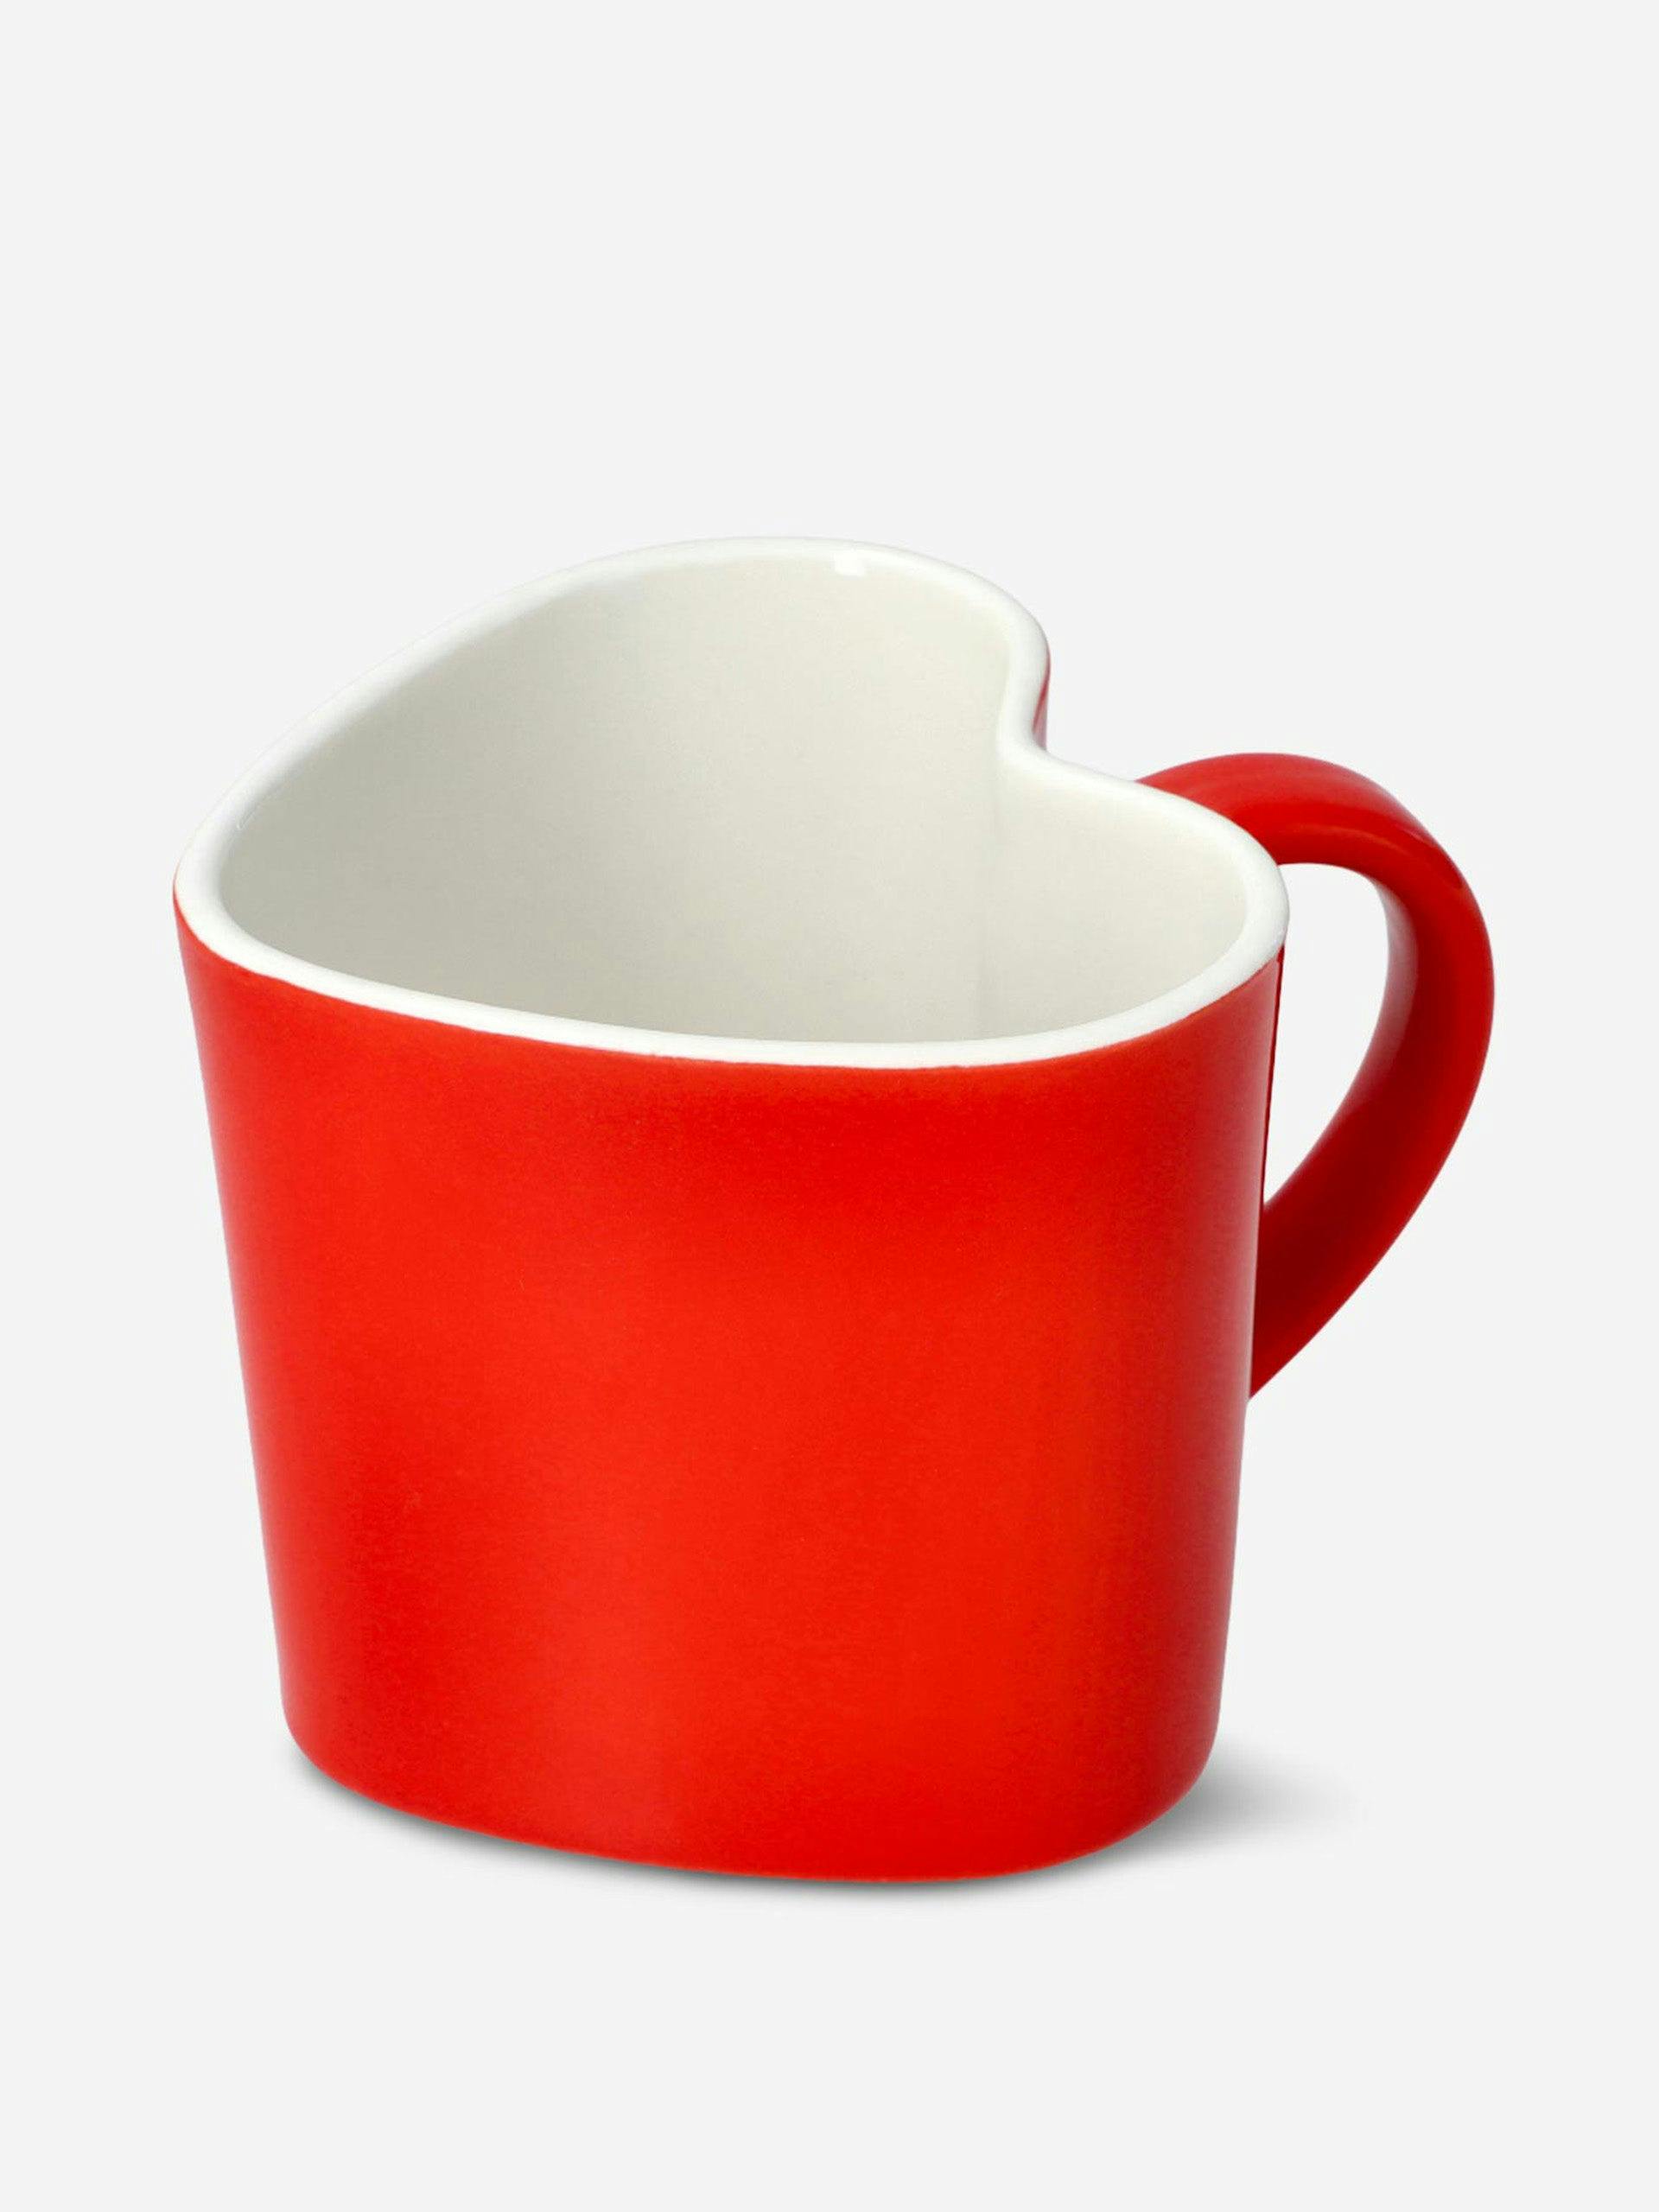 Red heart shaped mug